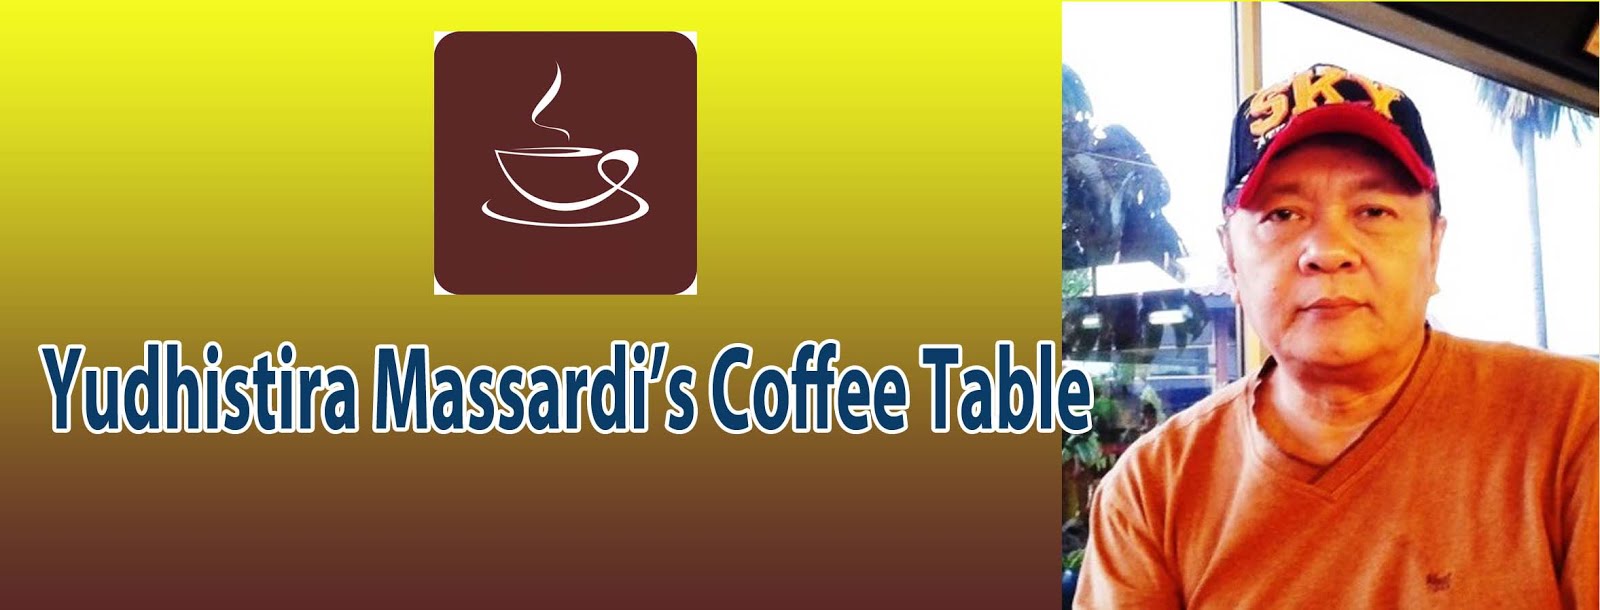 Yudhistira Massardi's Coffee Table